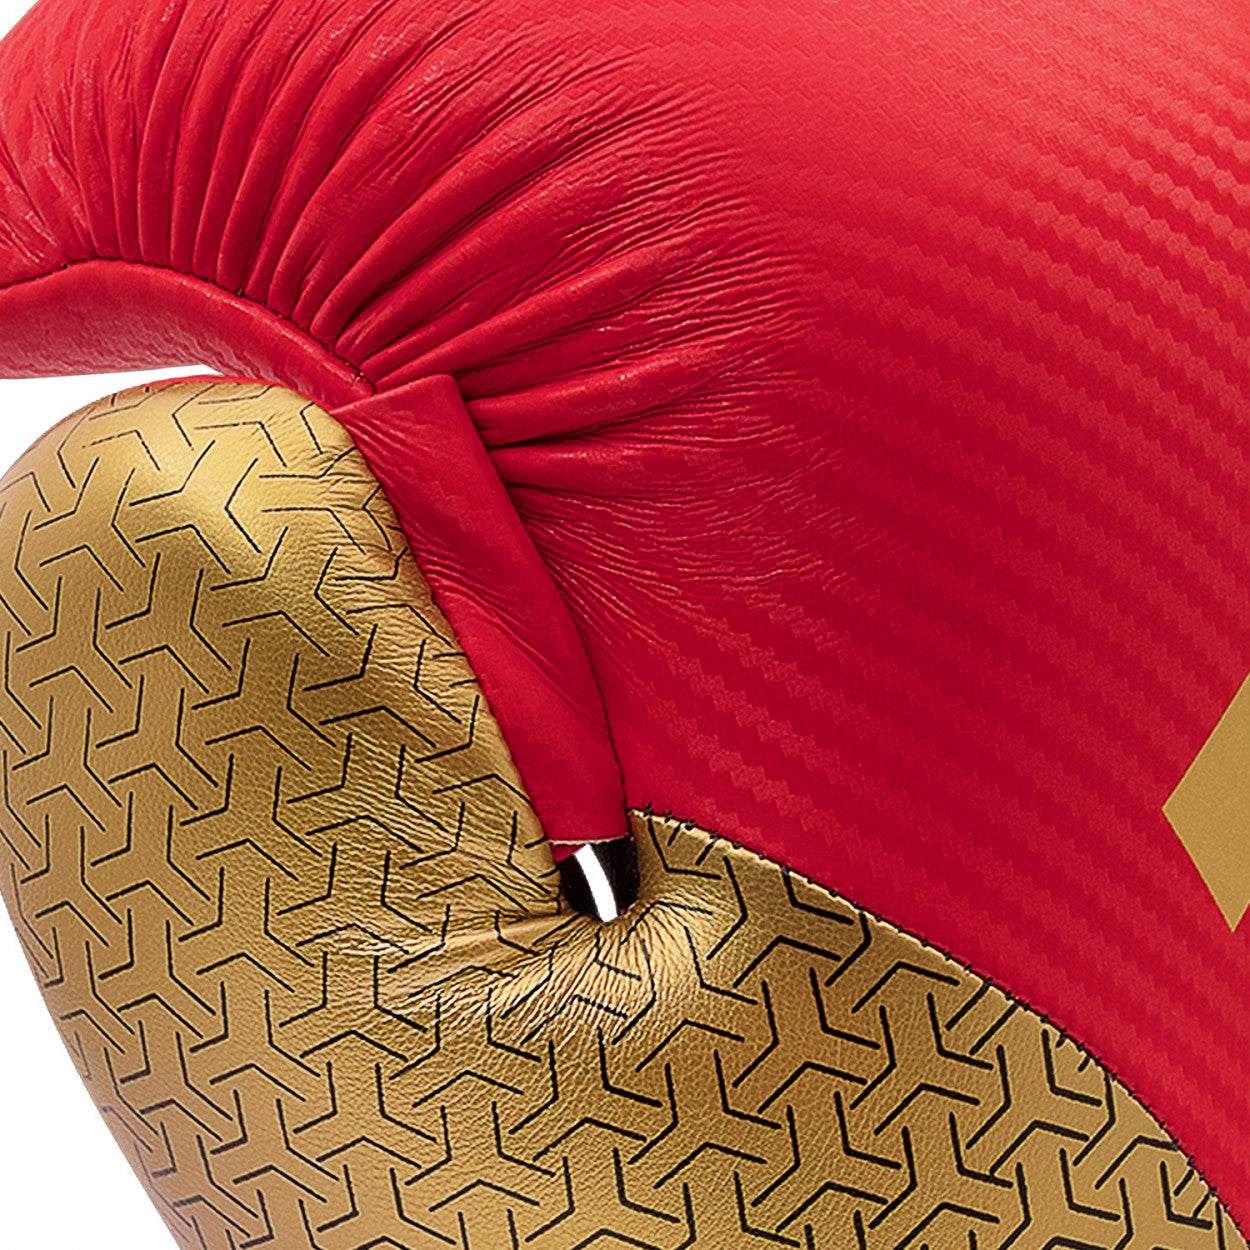 Pointfighting adidas PRO WAKO Kickboxing Gloves